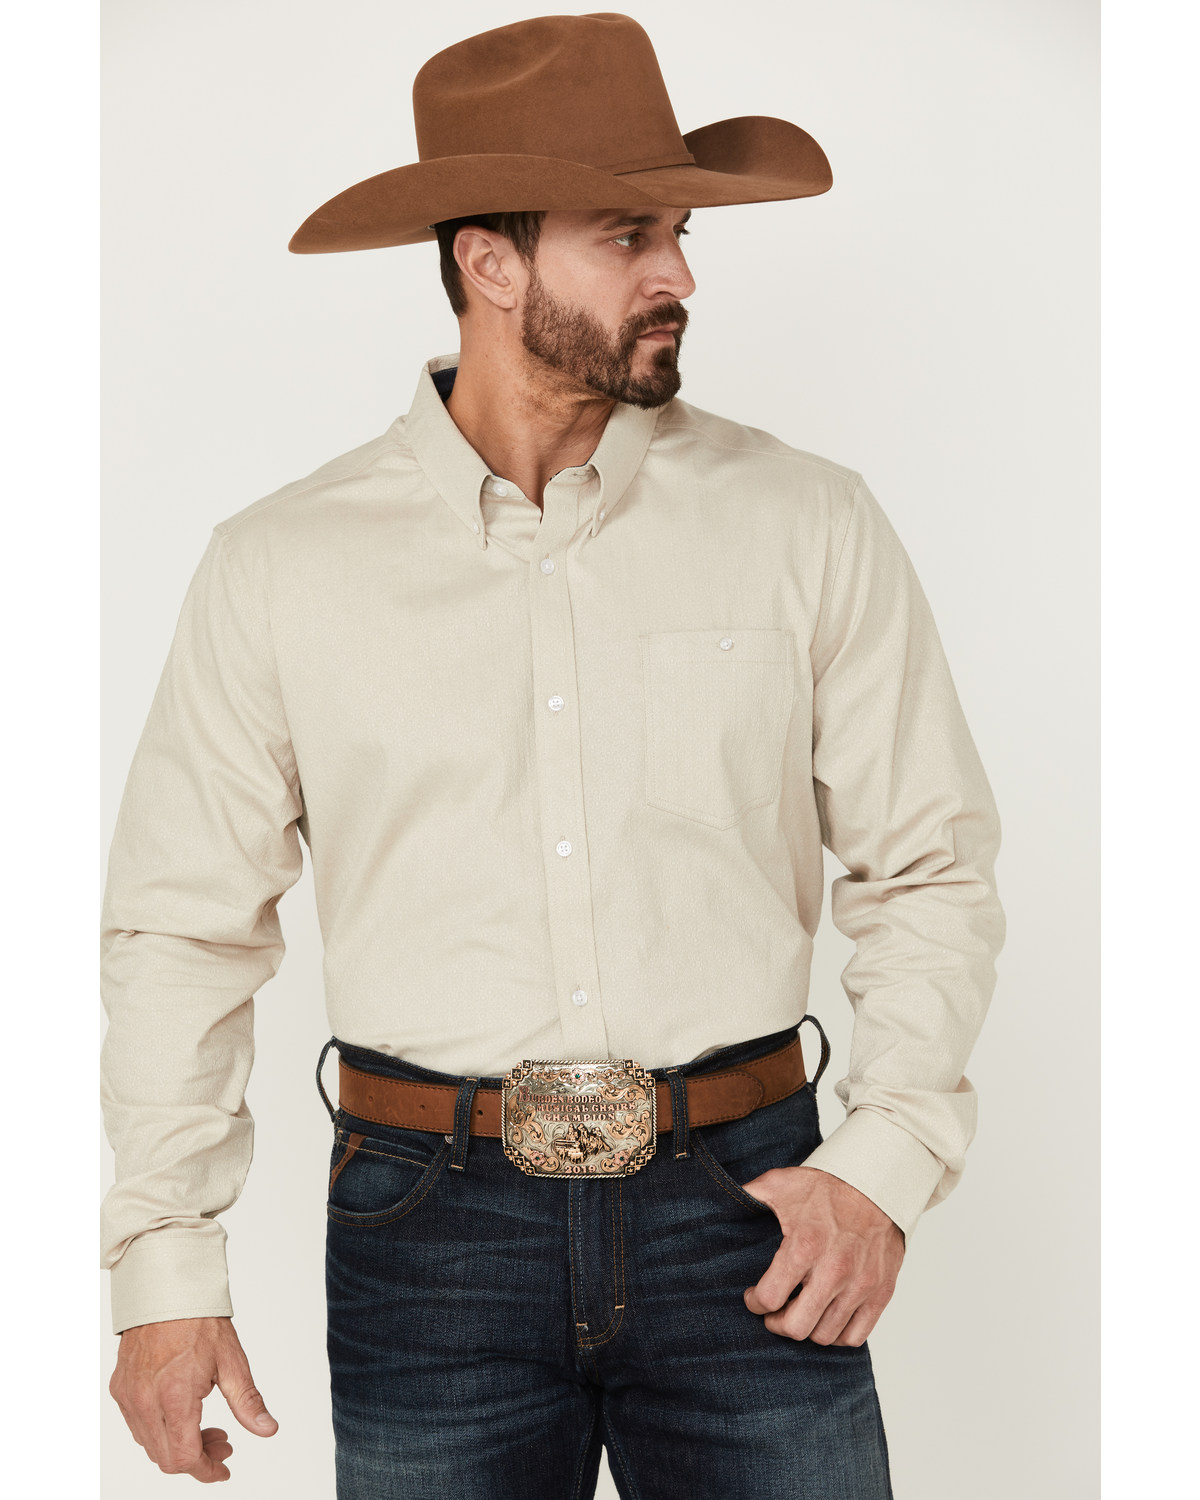 RANK 45® Men's Hazer Floral Print Long Sleeve Button-Down Western Shirt